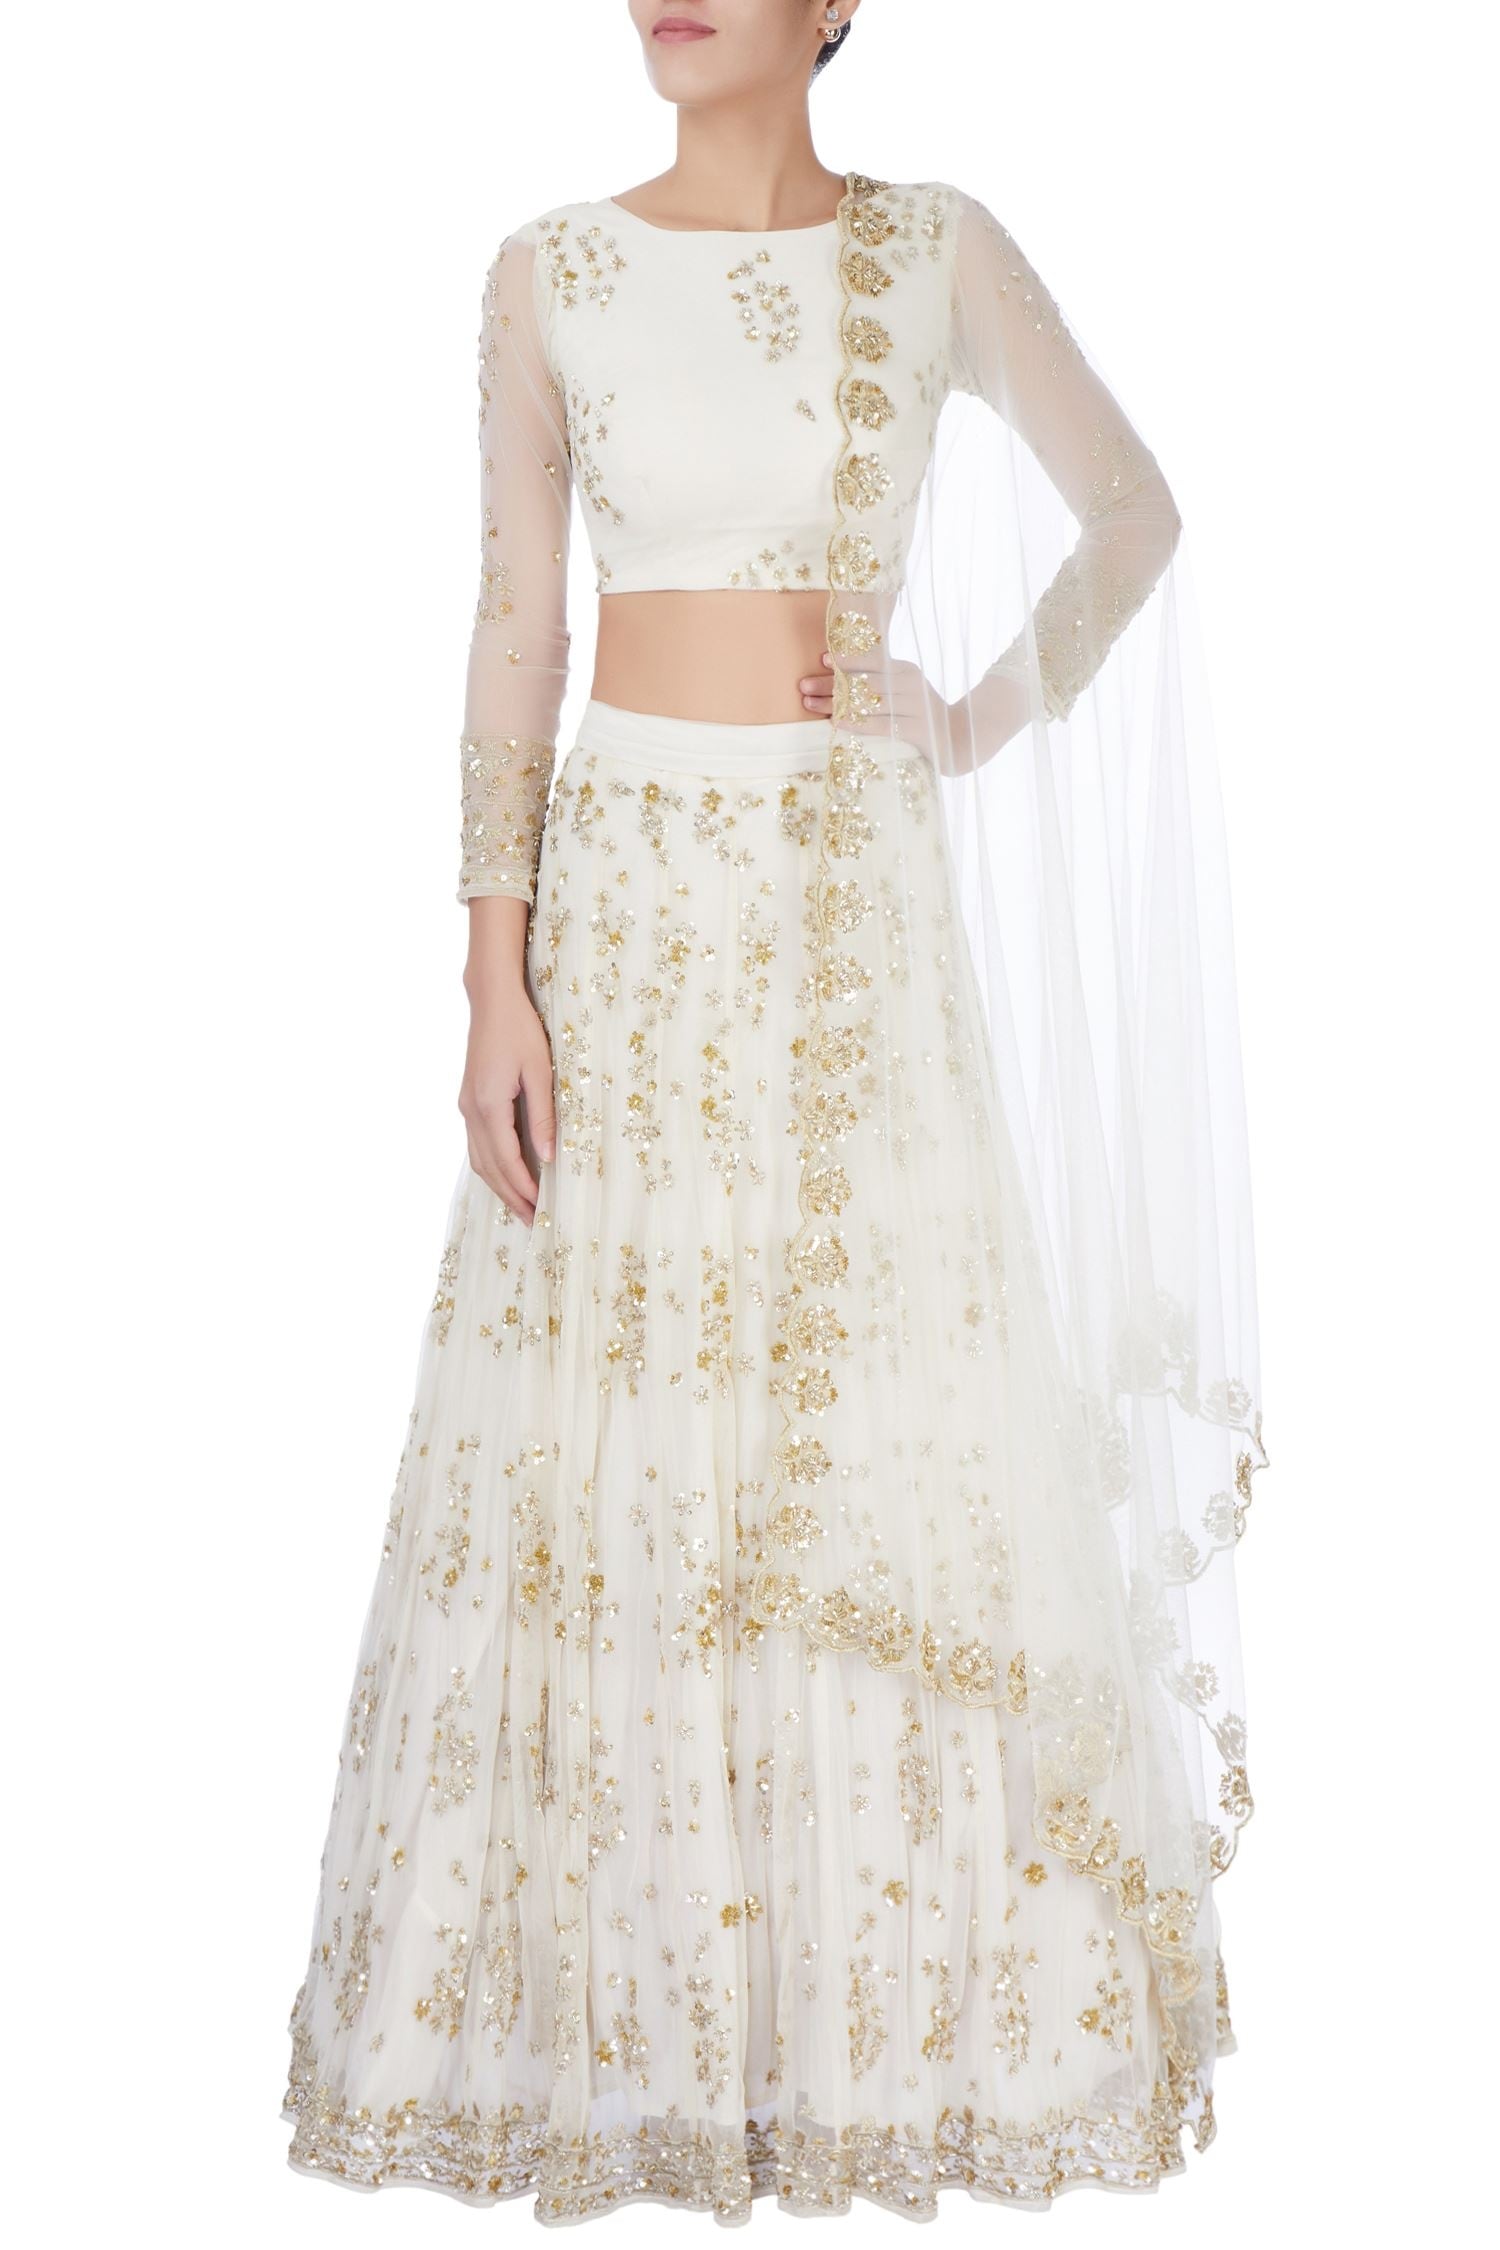 Buy White sequin embellished lehenga by Astha Narang at Aza Fashions